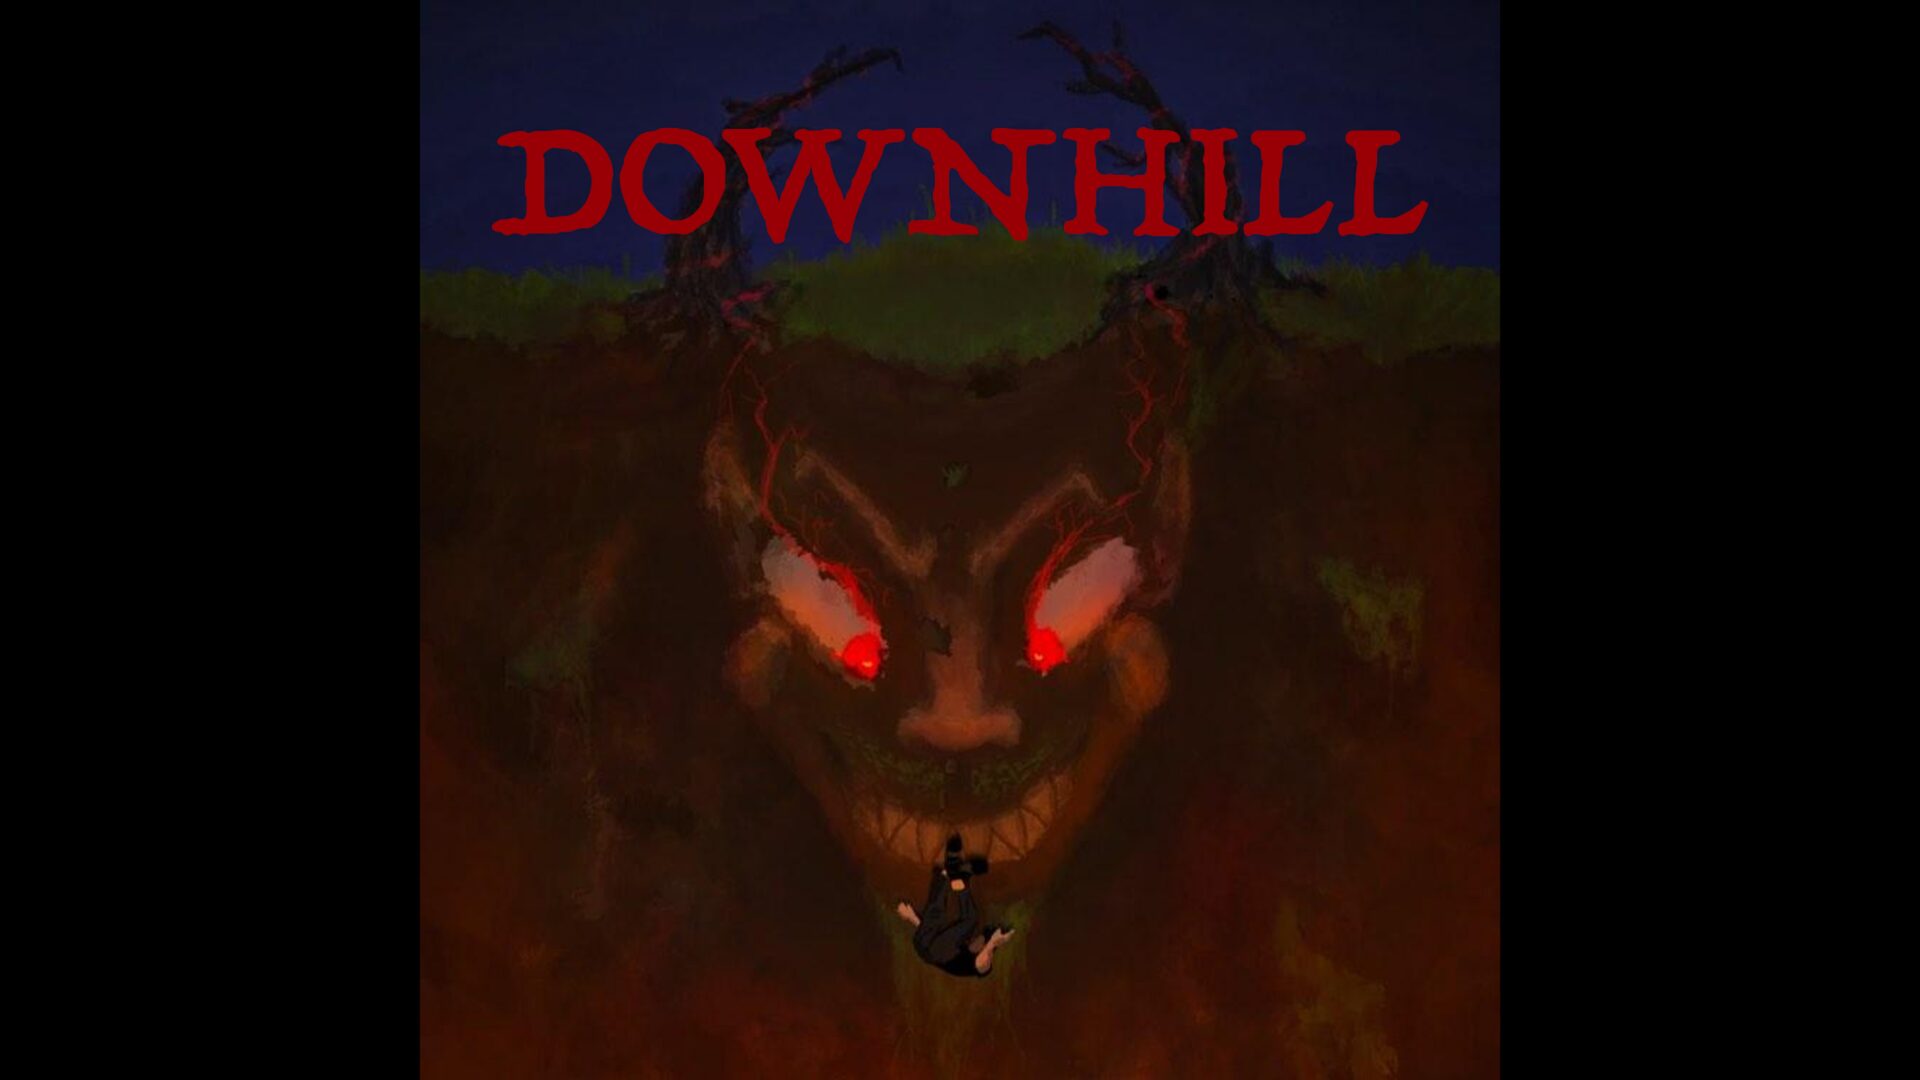 Downhill by WORDPLAII: Review